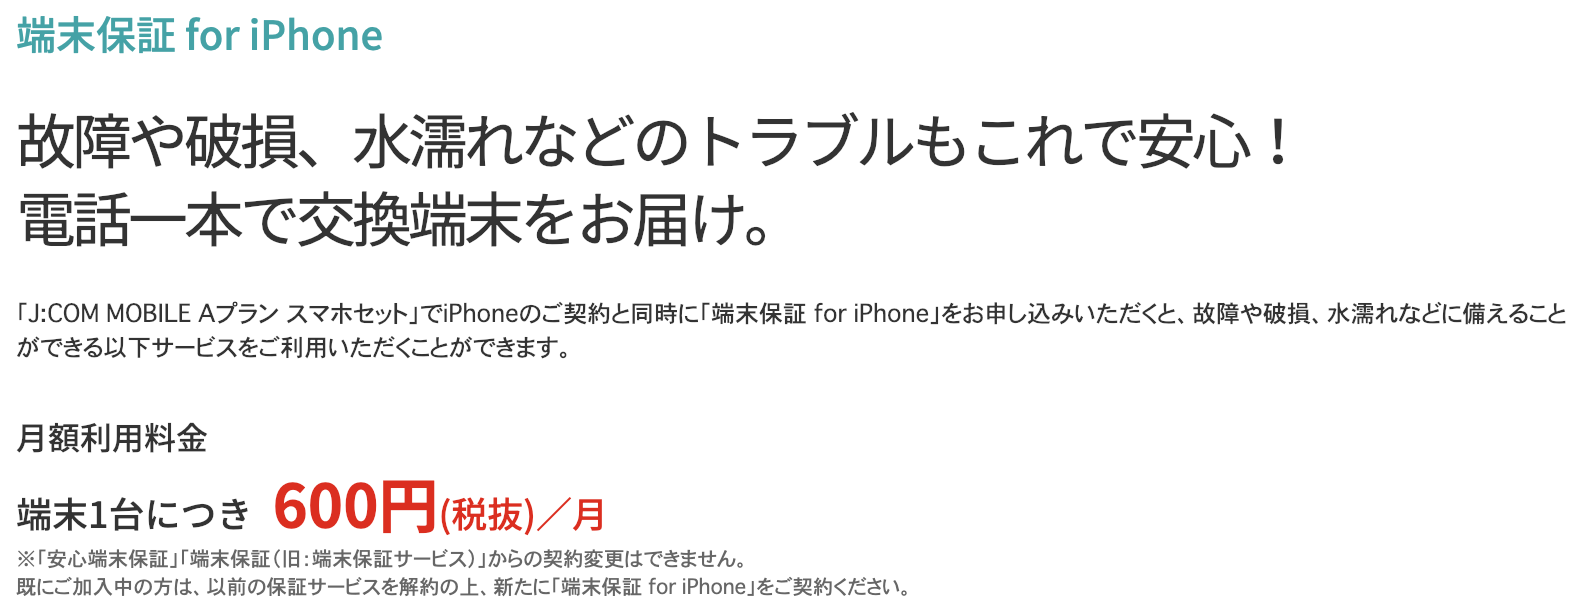 J:COM mobile 端末保証　iPhone